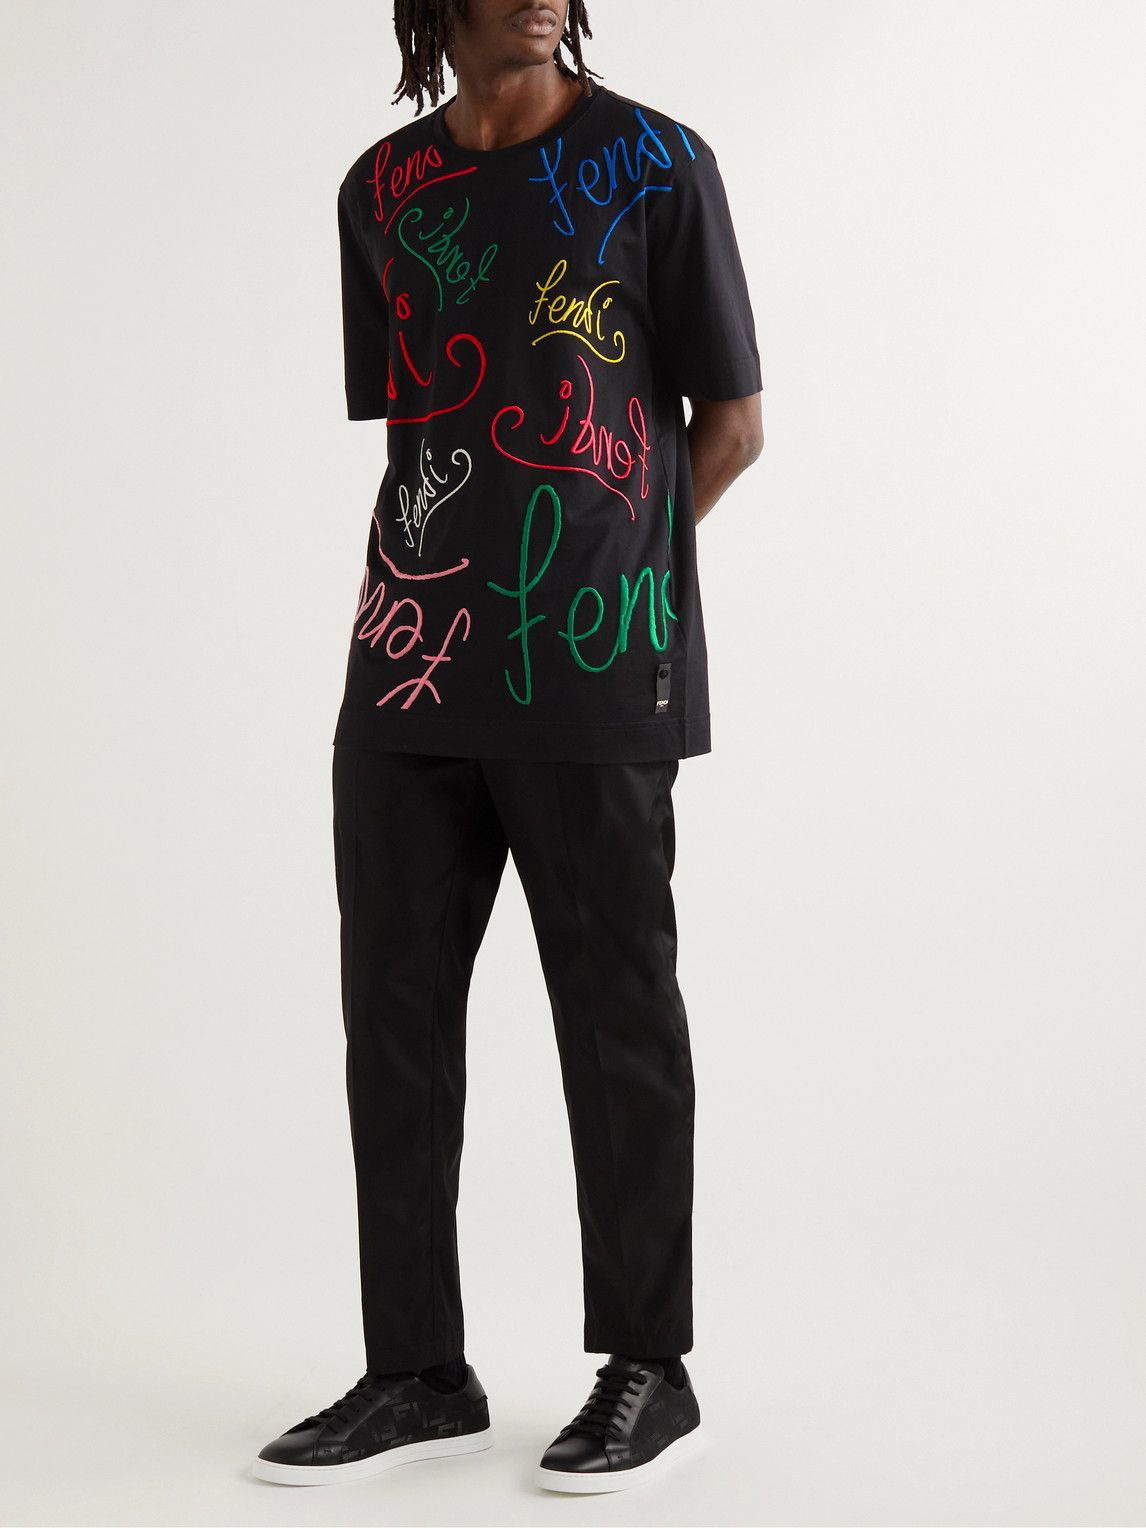 reguleren revolutie Evolueren Fendi - Noel Fielding Logo-Embroidered Cotton-Jersey T-Shirt - Black Fendi